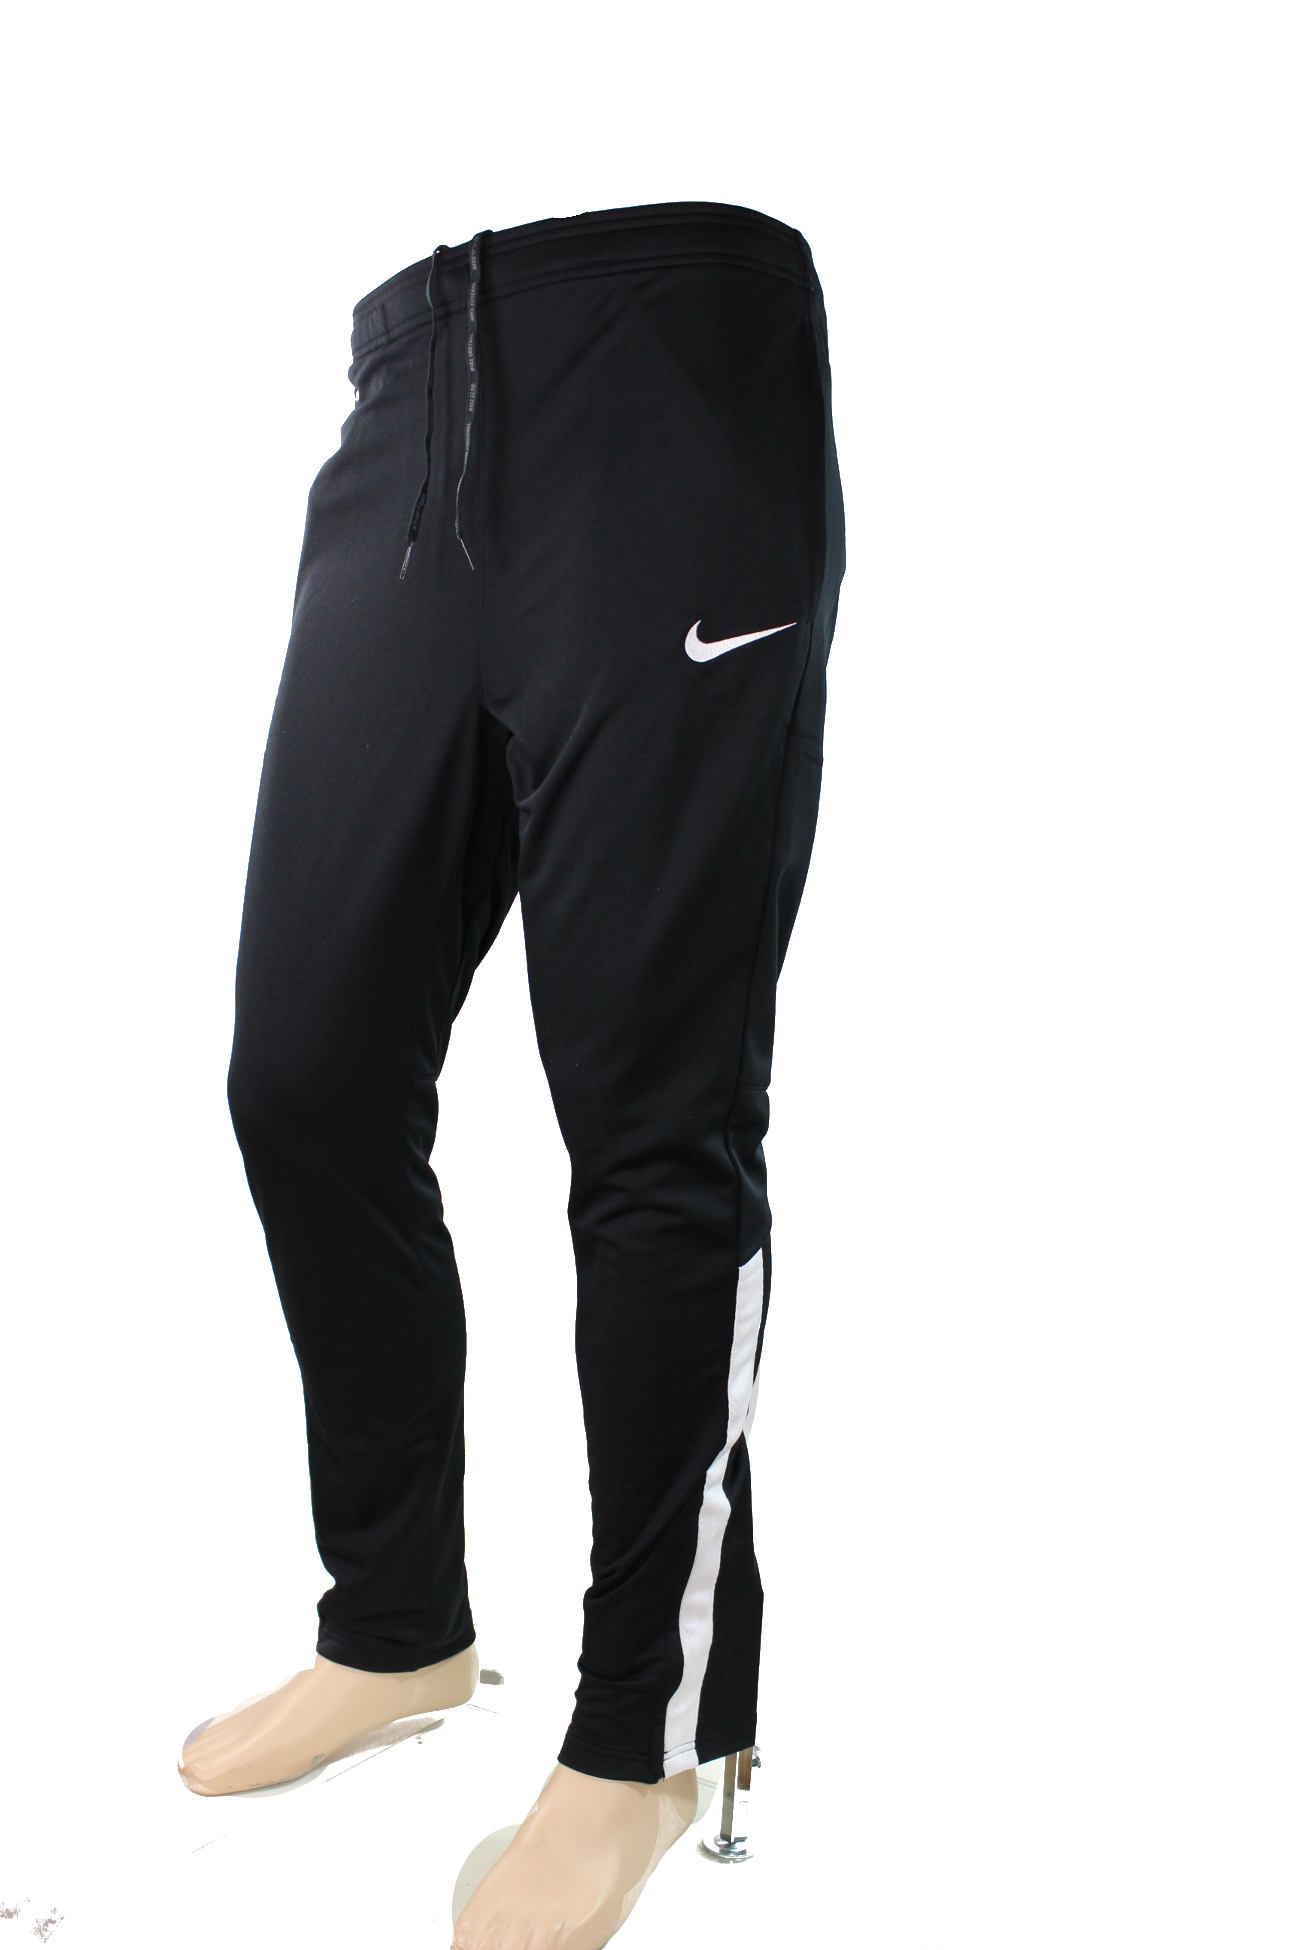 Squad Sideline Knit 2 Nike Pants Track Training Men ZIP POCKETS stretch ...